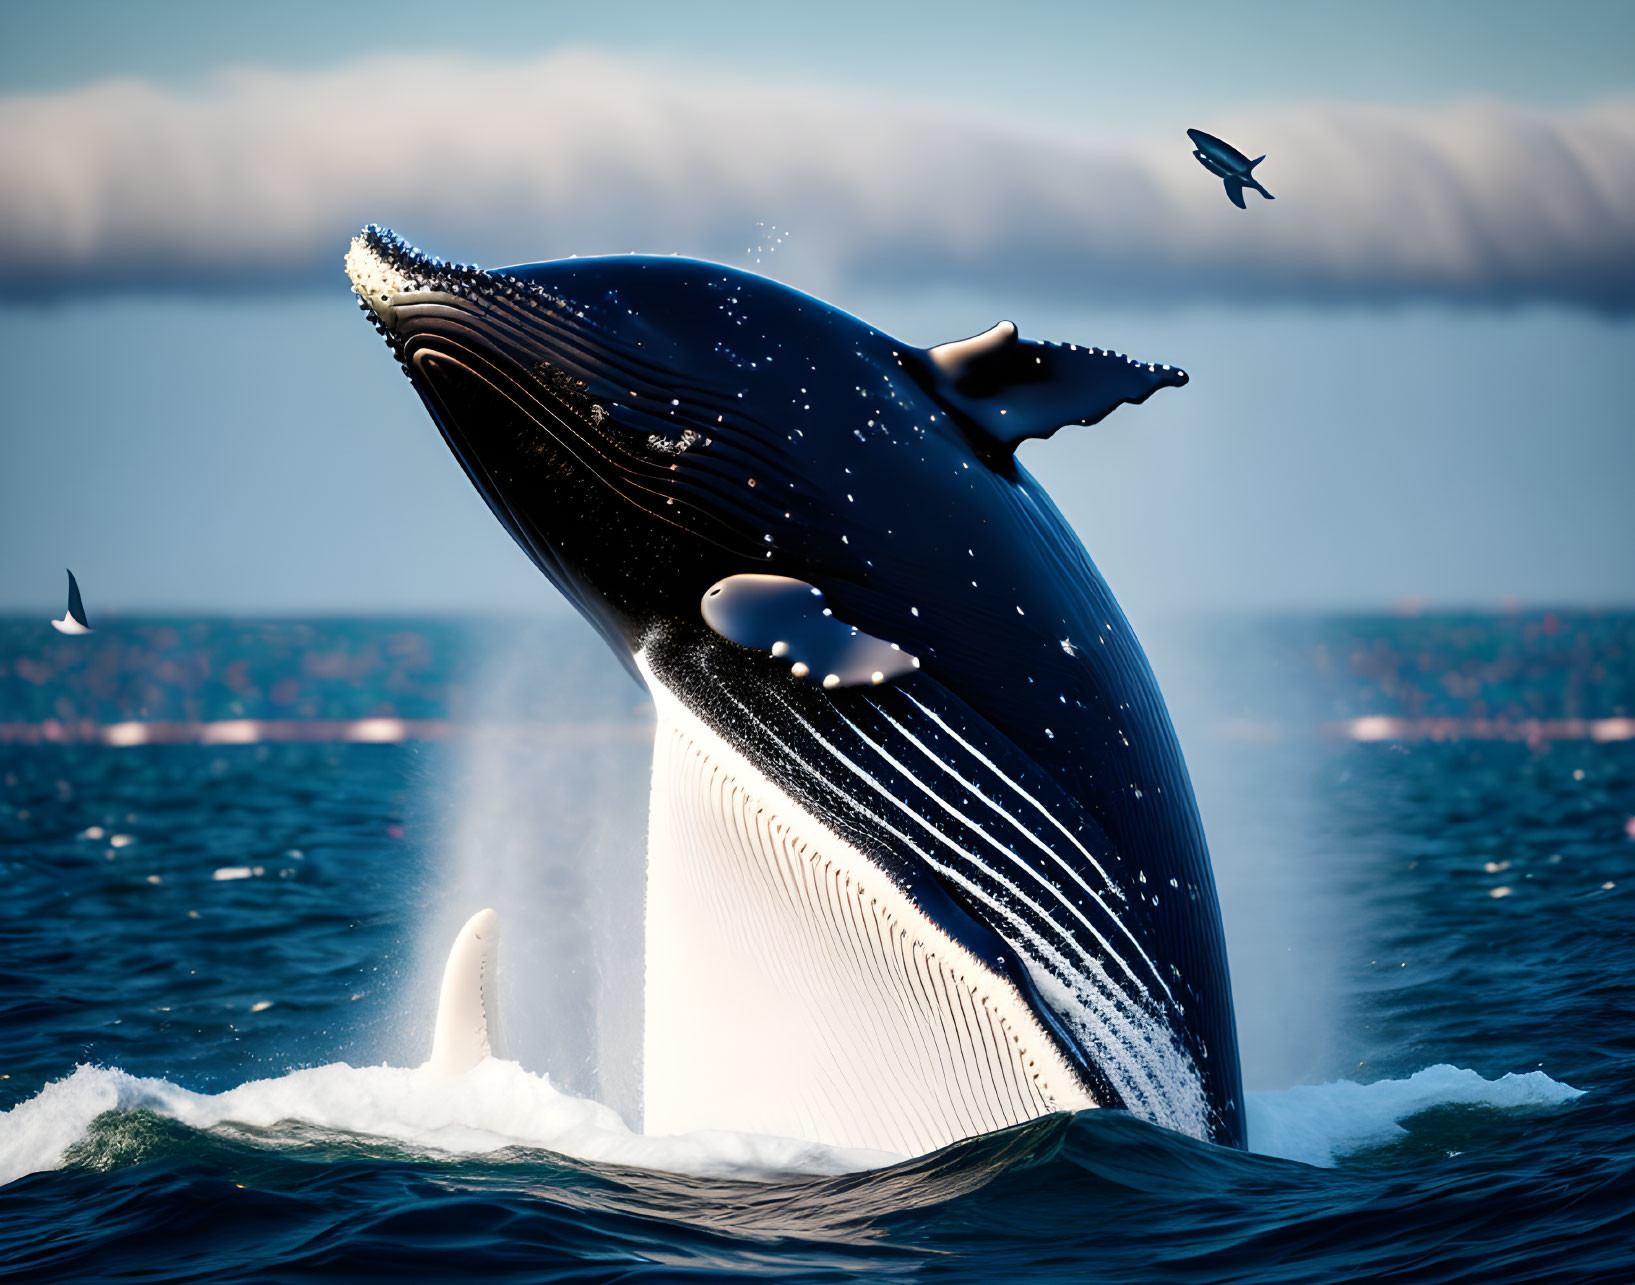 Humpback whale breaching ocean surface with bird, calm seas, cloudy sky